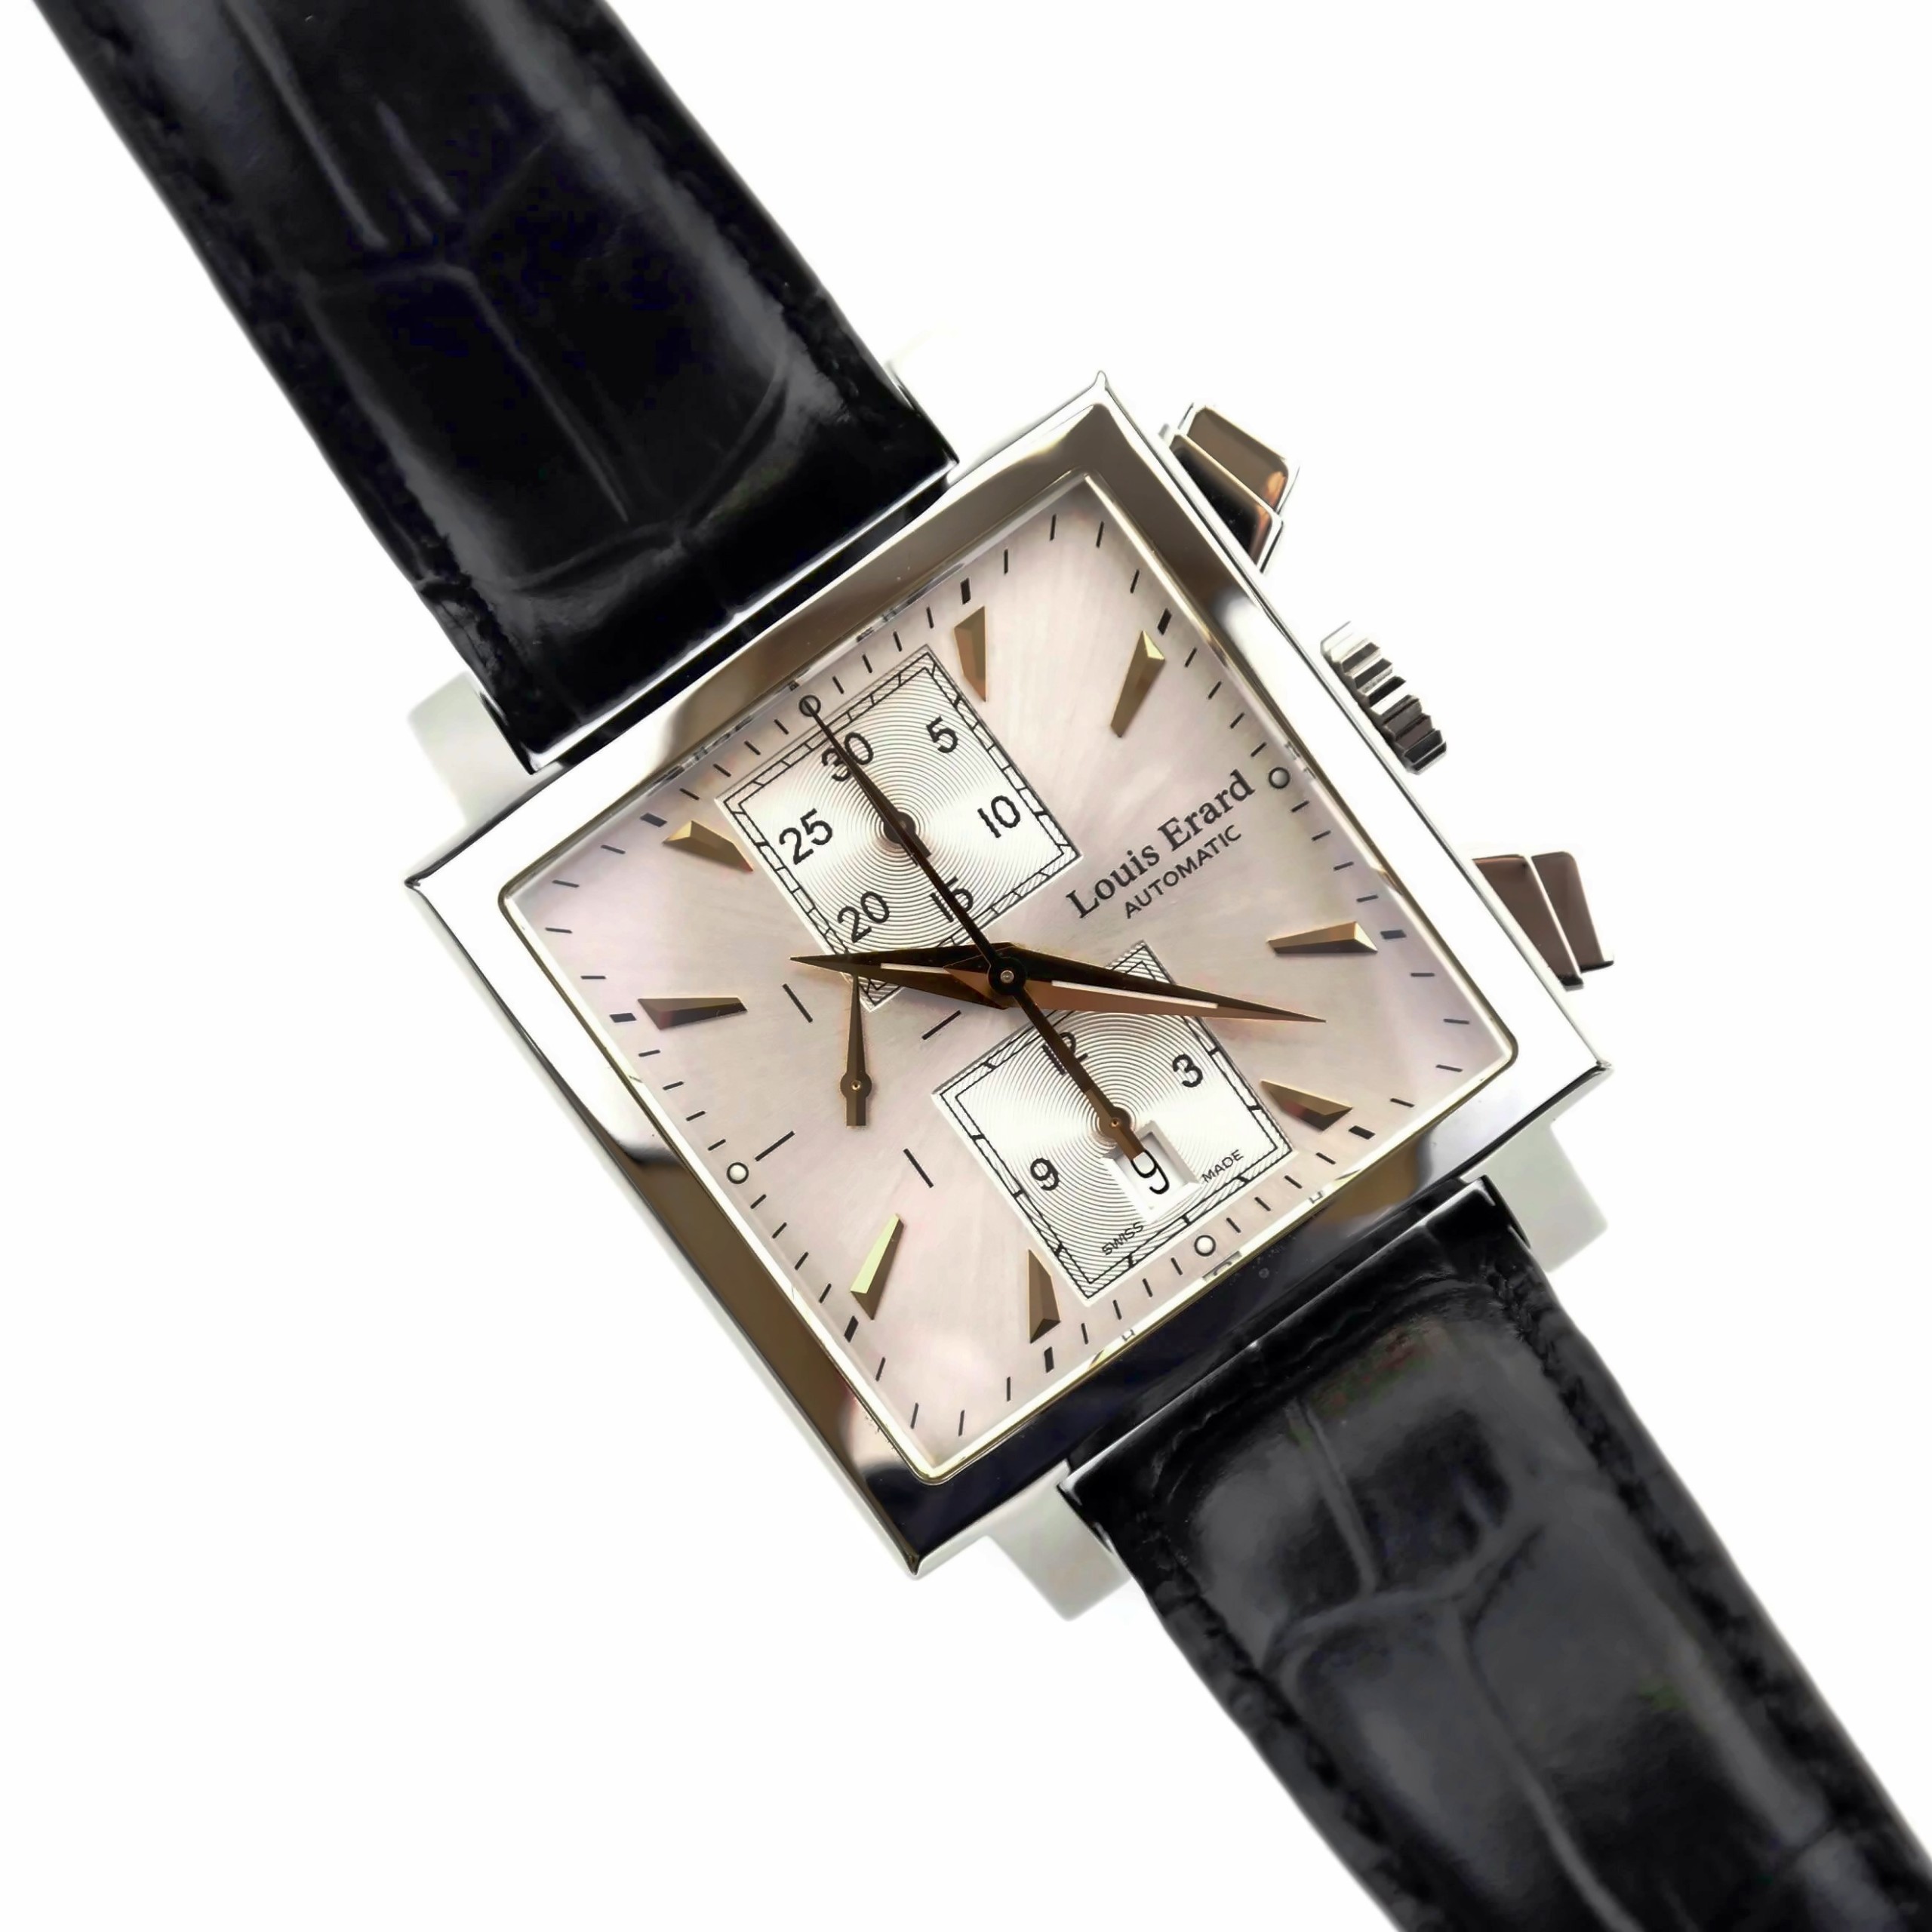 60 Louis Erard Chronograph ideas  louis, watches for men, chronograph